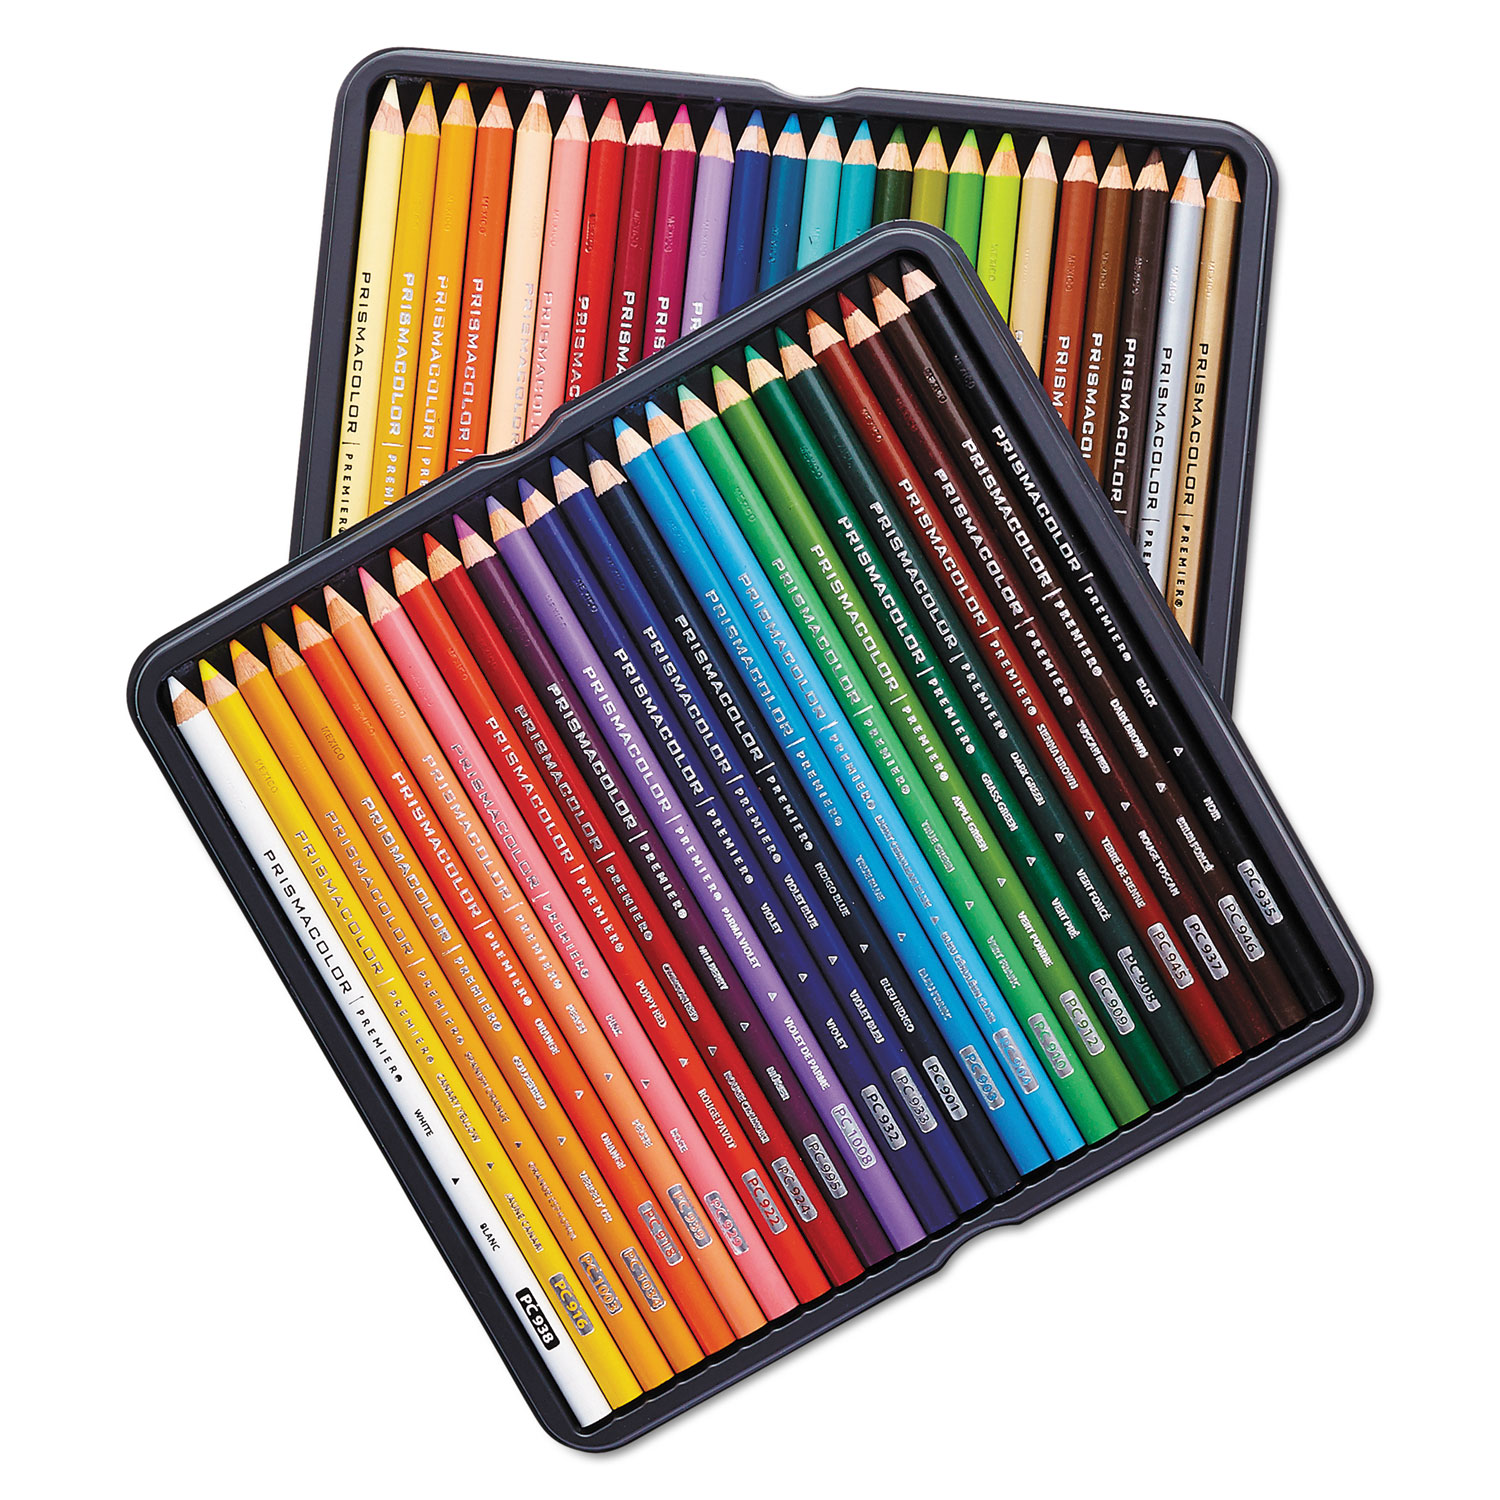 Prismacolor Verithin Colored Pencils RedBlue Lead RedBlue Barrel Pack Of 12  - Office Depot